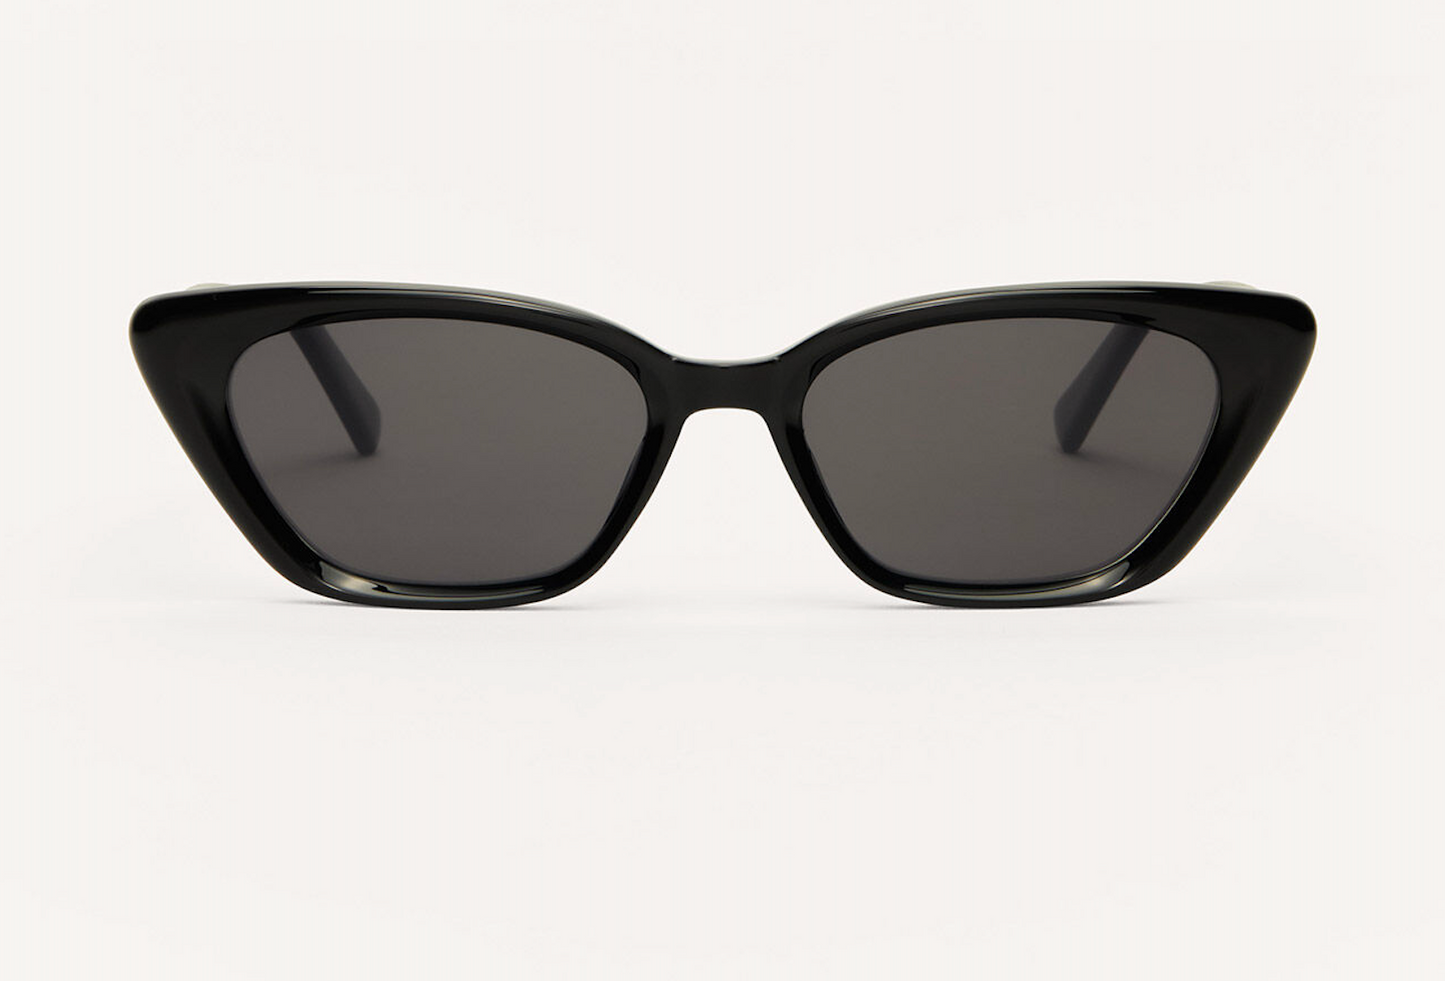 Staycation Polarized Sunglasses / Black Grey